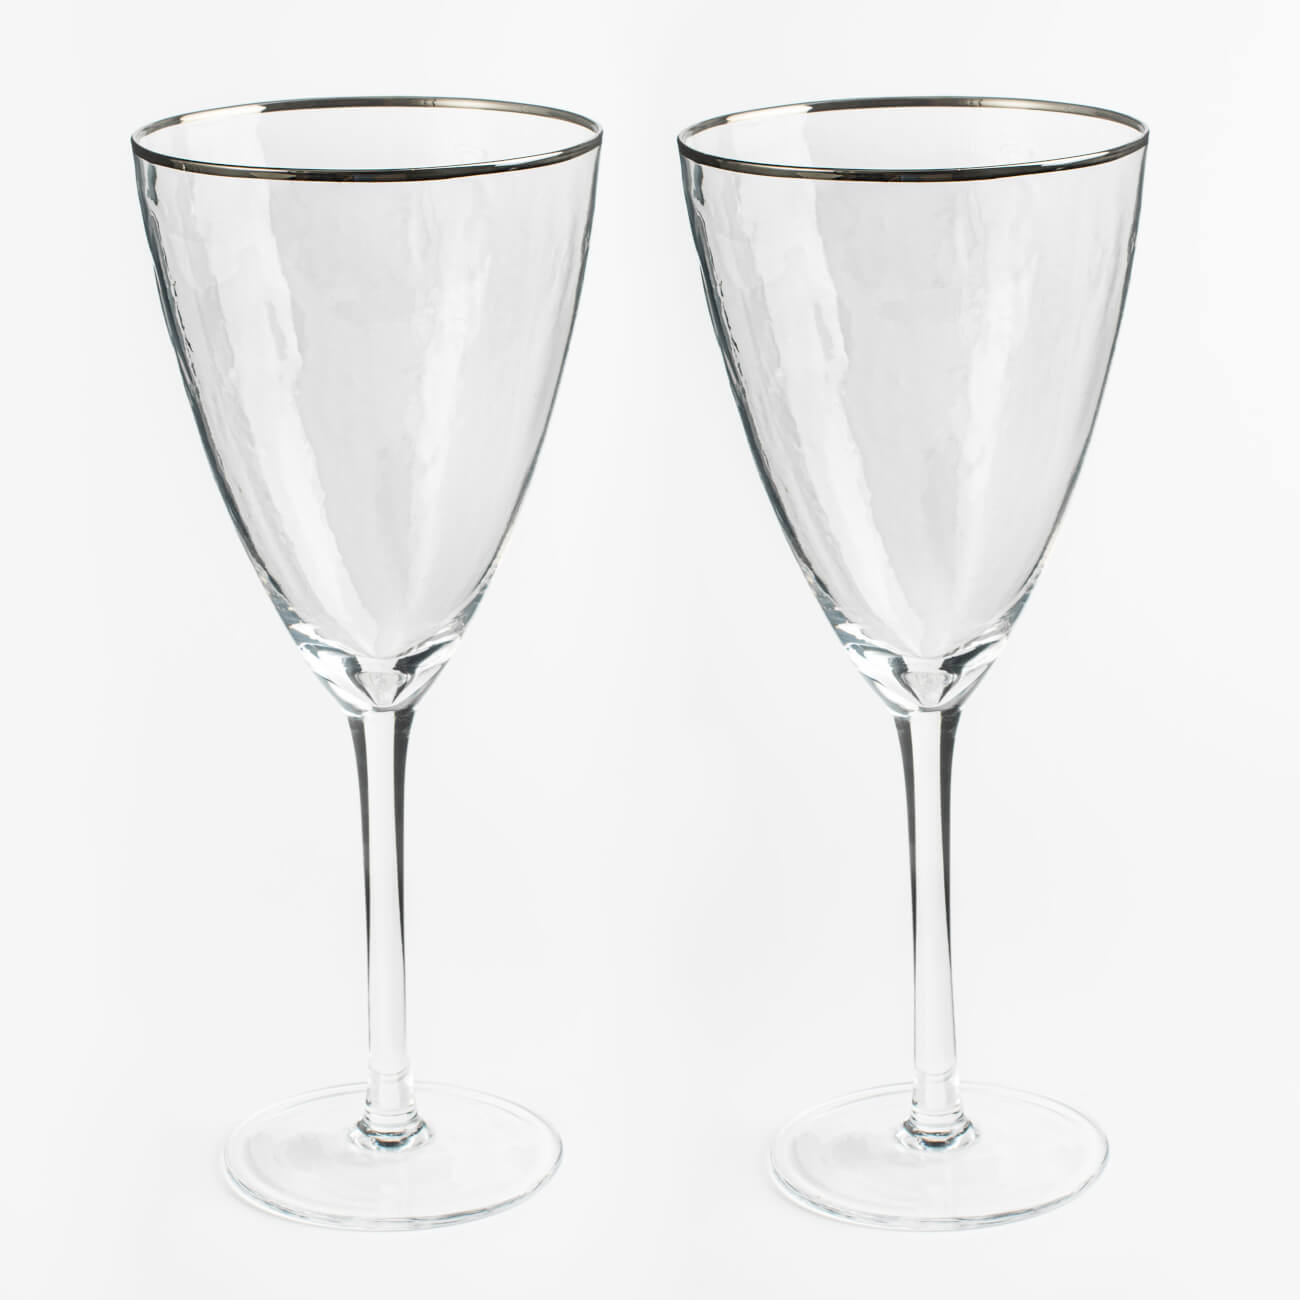 Бокал для вина, 400 мл, 2 шт, стекло, с серебристым кантом, Ripply silver бокал для мартини 250 мл 2 шт стекло перламутр ripply polar